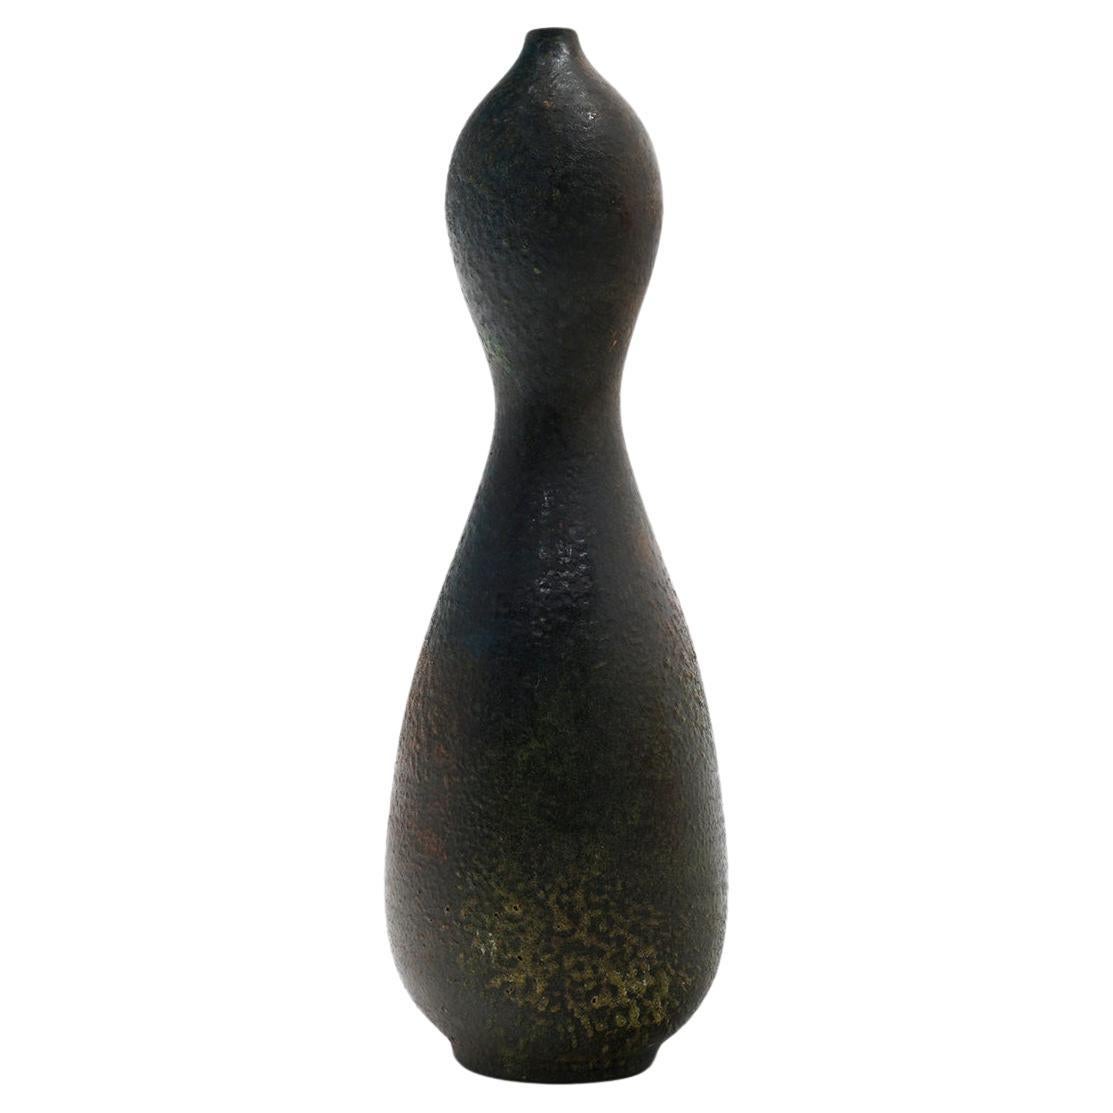 Studio Vase by Marcello Fantoni, Studio Made Glazed Ceramic, Italy 1950s Signed